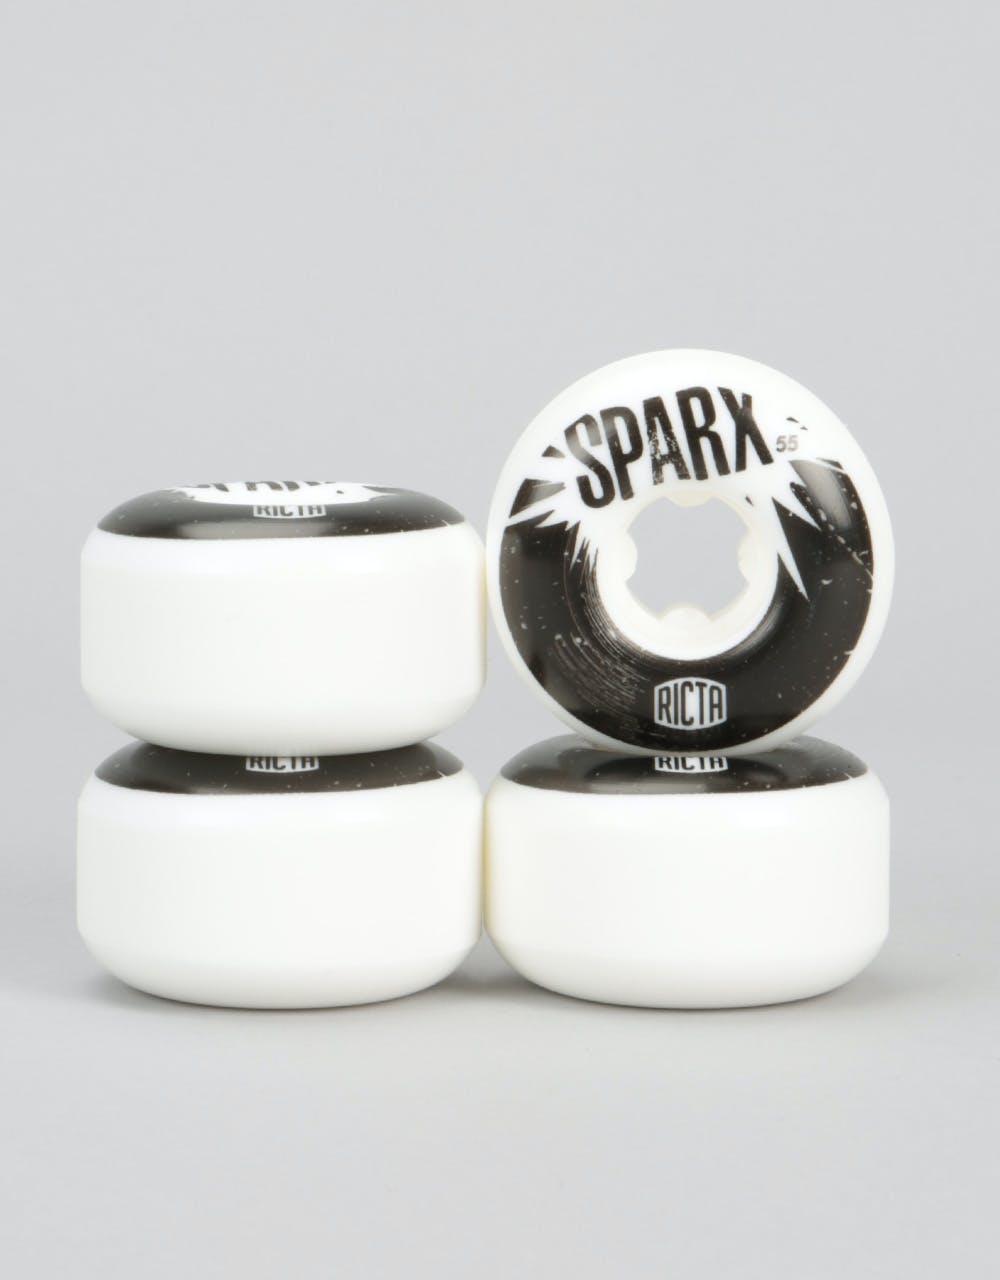 Ricta Sparkx Shockwaves 101a Team Wheel - 55mm